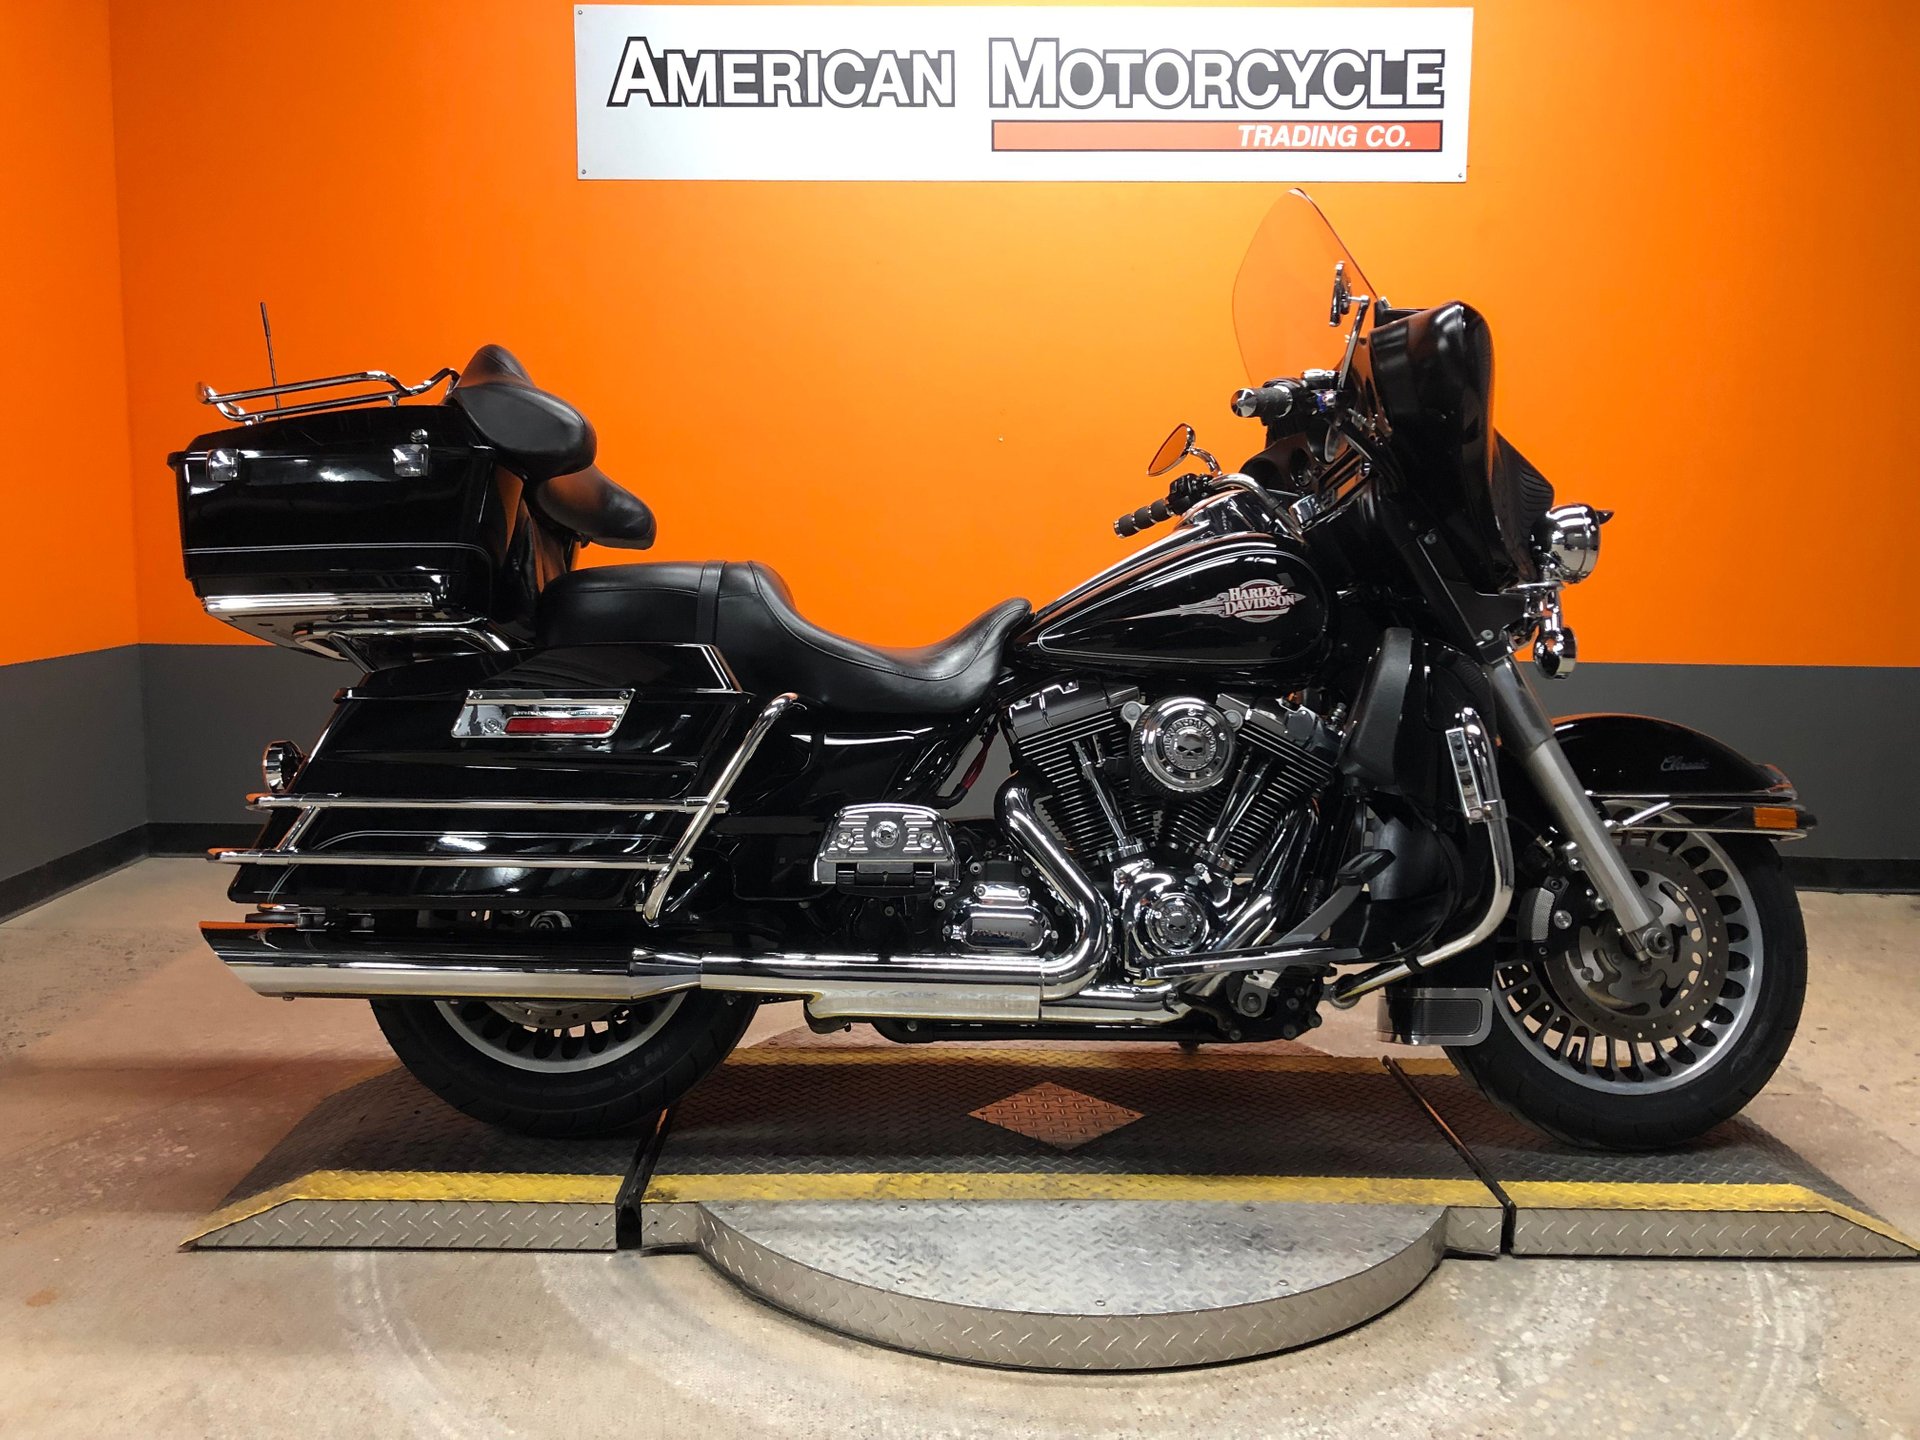 2011 Harley-Davidson Electra Glide | American Motorcycle Trading Company -  Used Harley Davidson Motorcycles